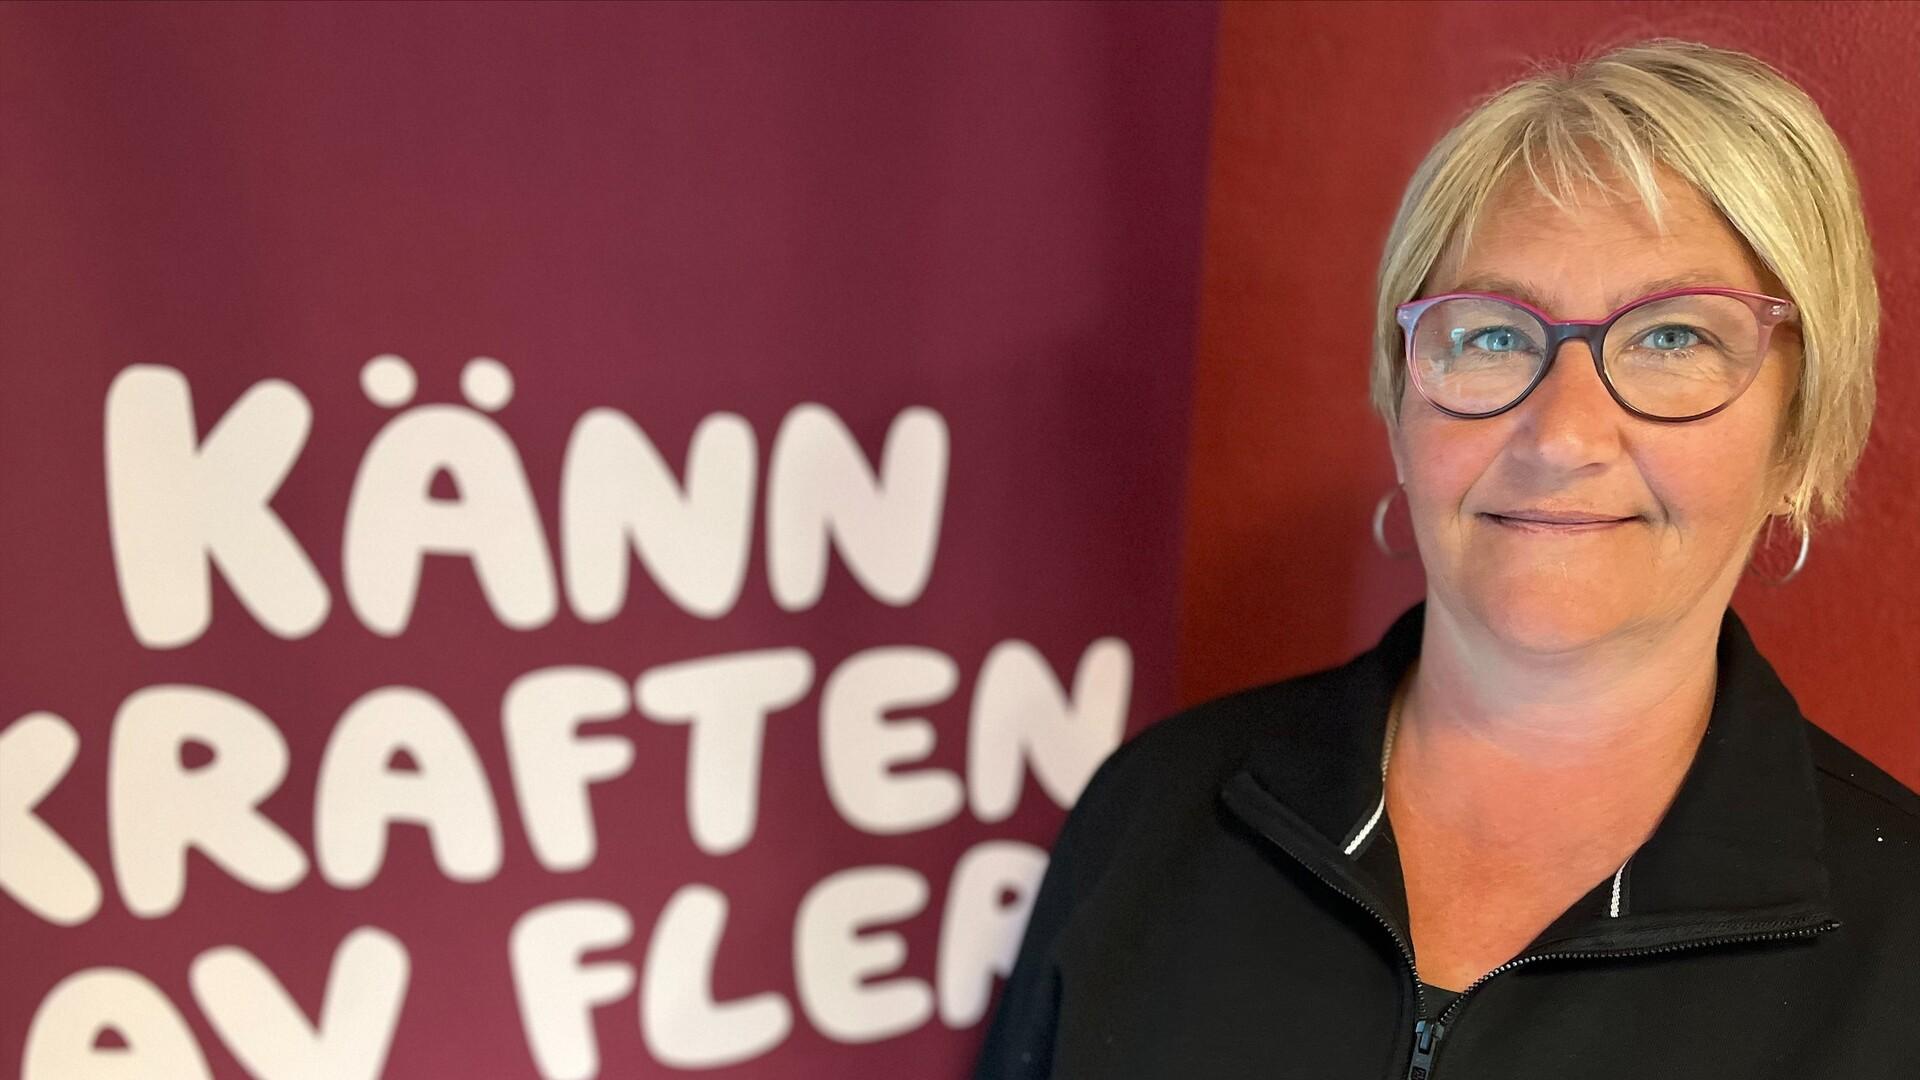 Helen Persson, Kommunal